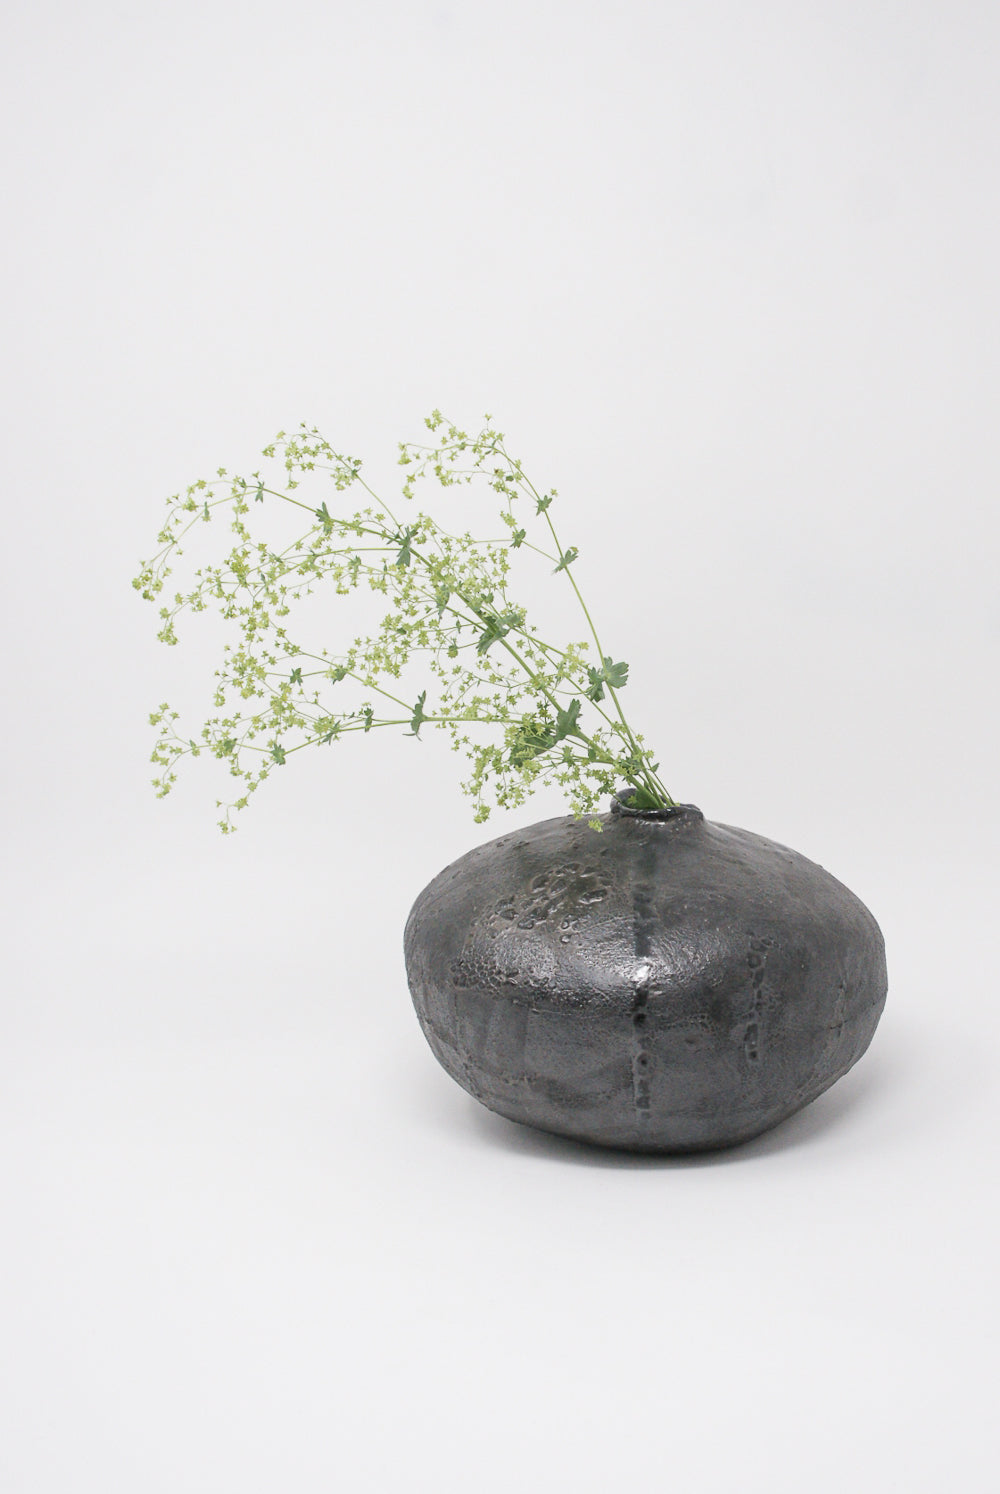 MONDAYS - New Moon Vase in Black Glaze on Stoneware with flowers